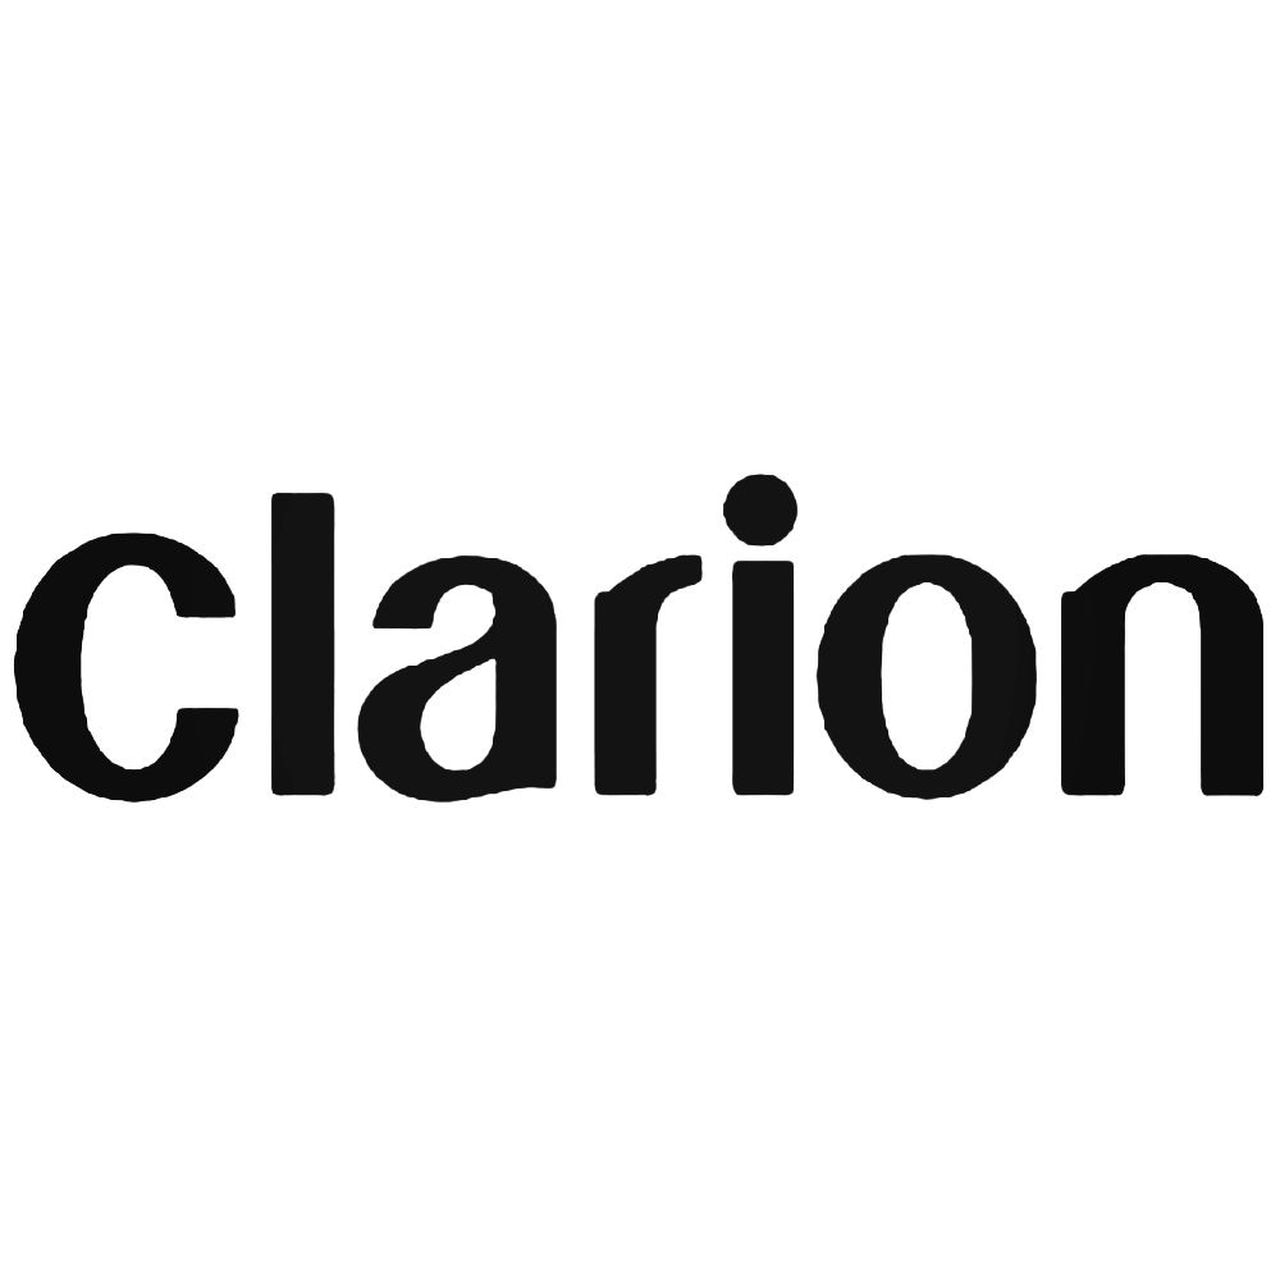 Clarion Logo - Clarion Logo Sticker